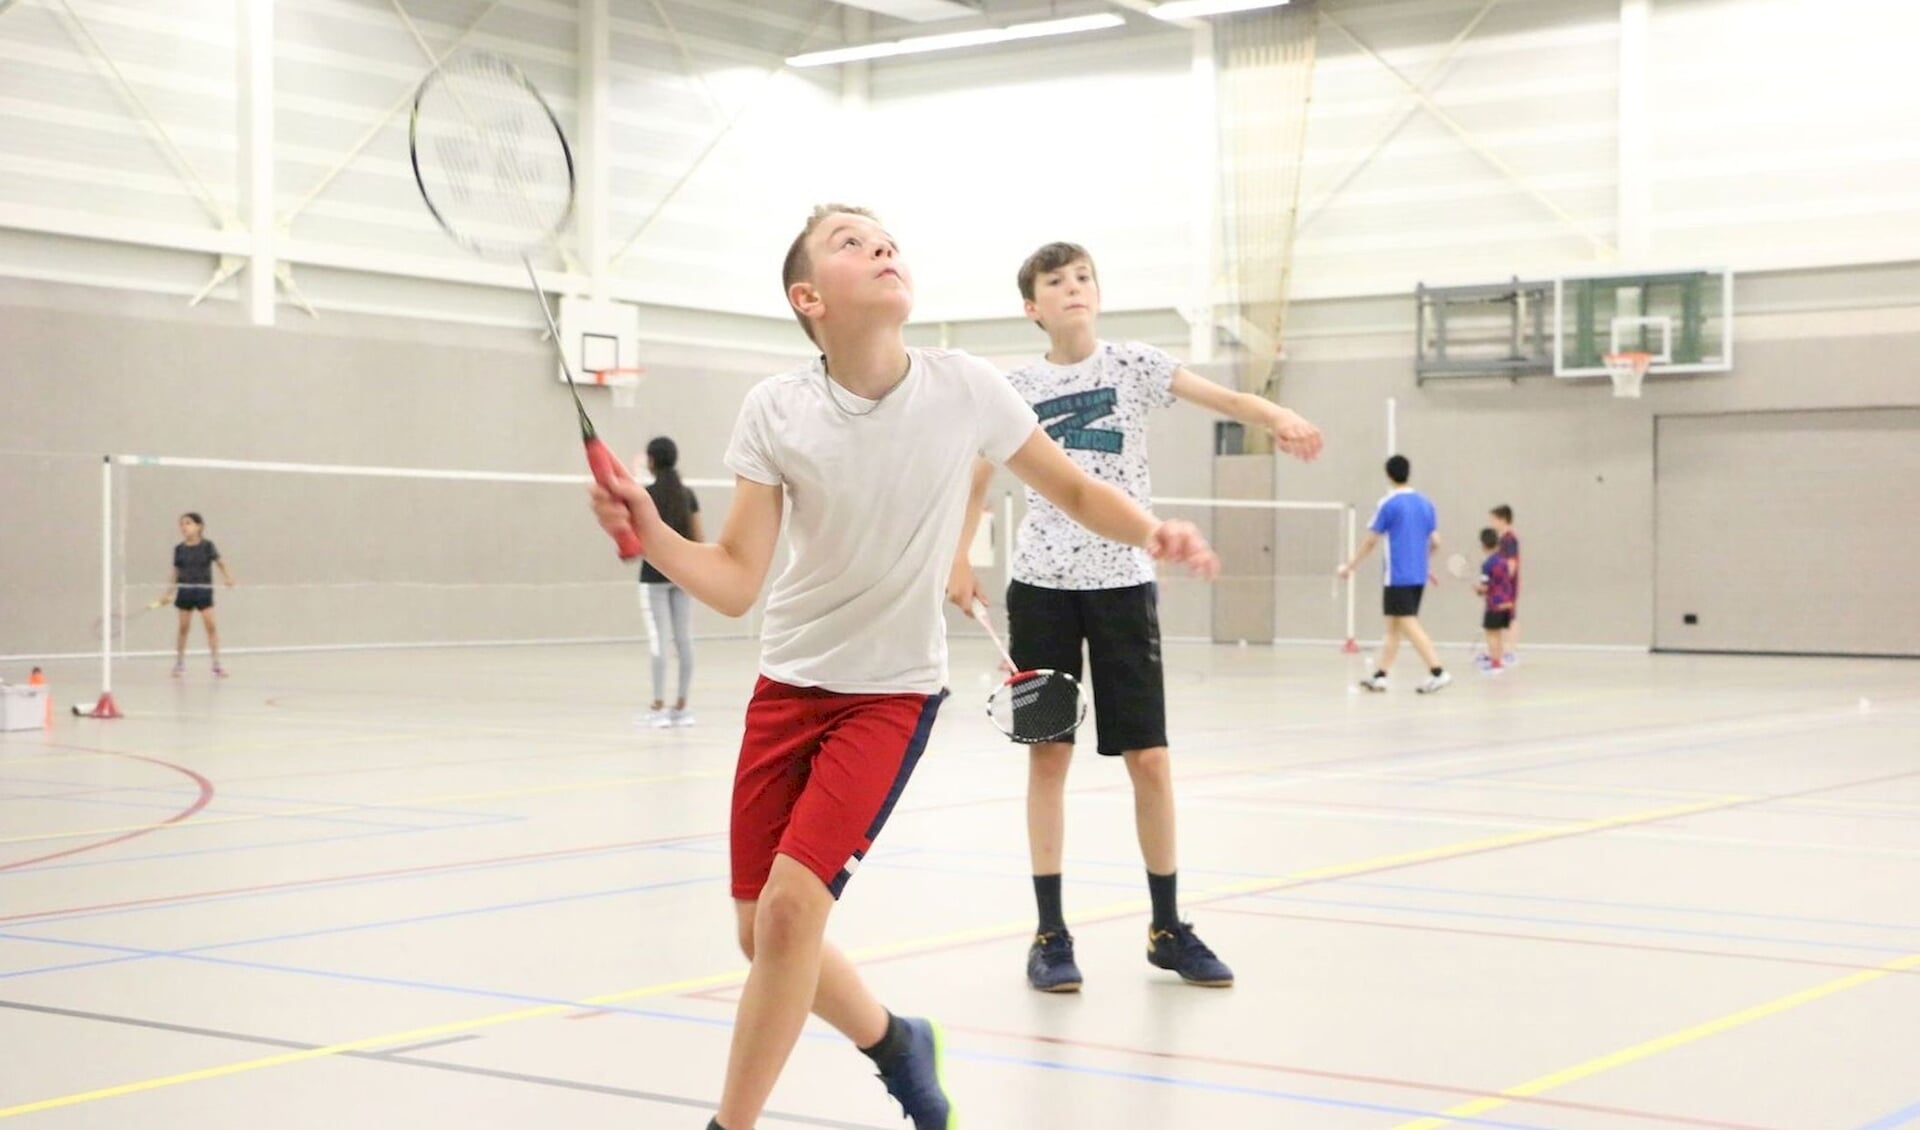 Onze jeugdgroepen badmintonnen o.m. elke zaterdag